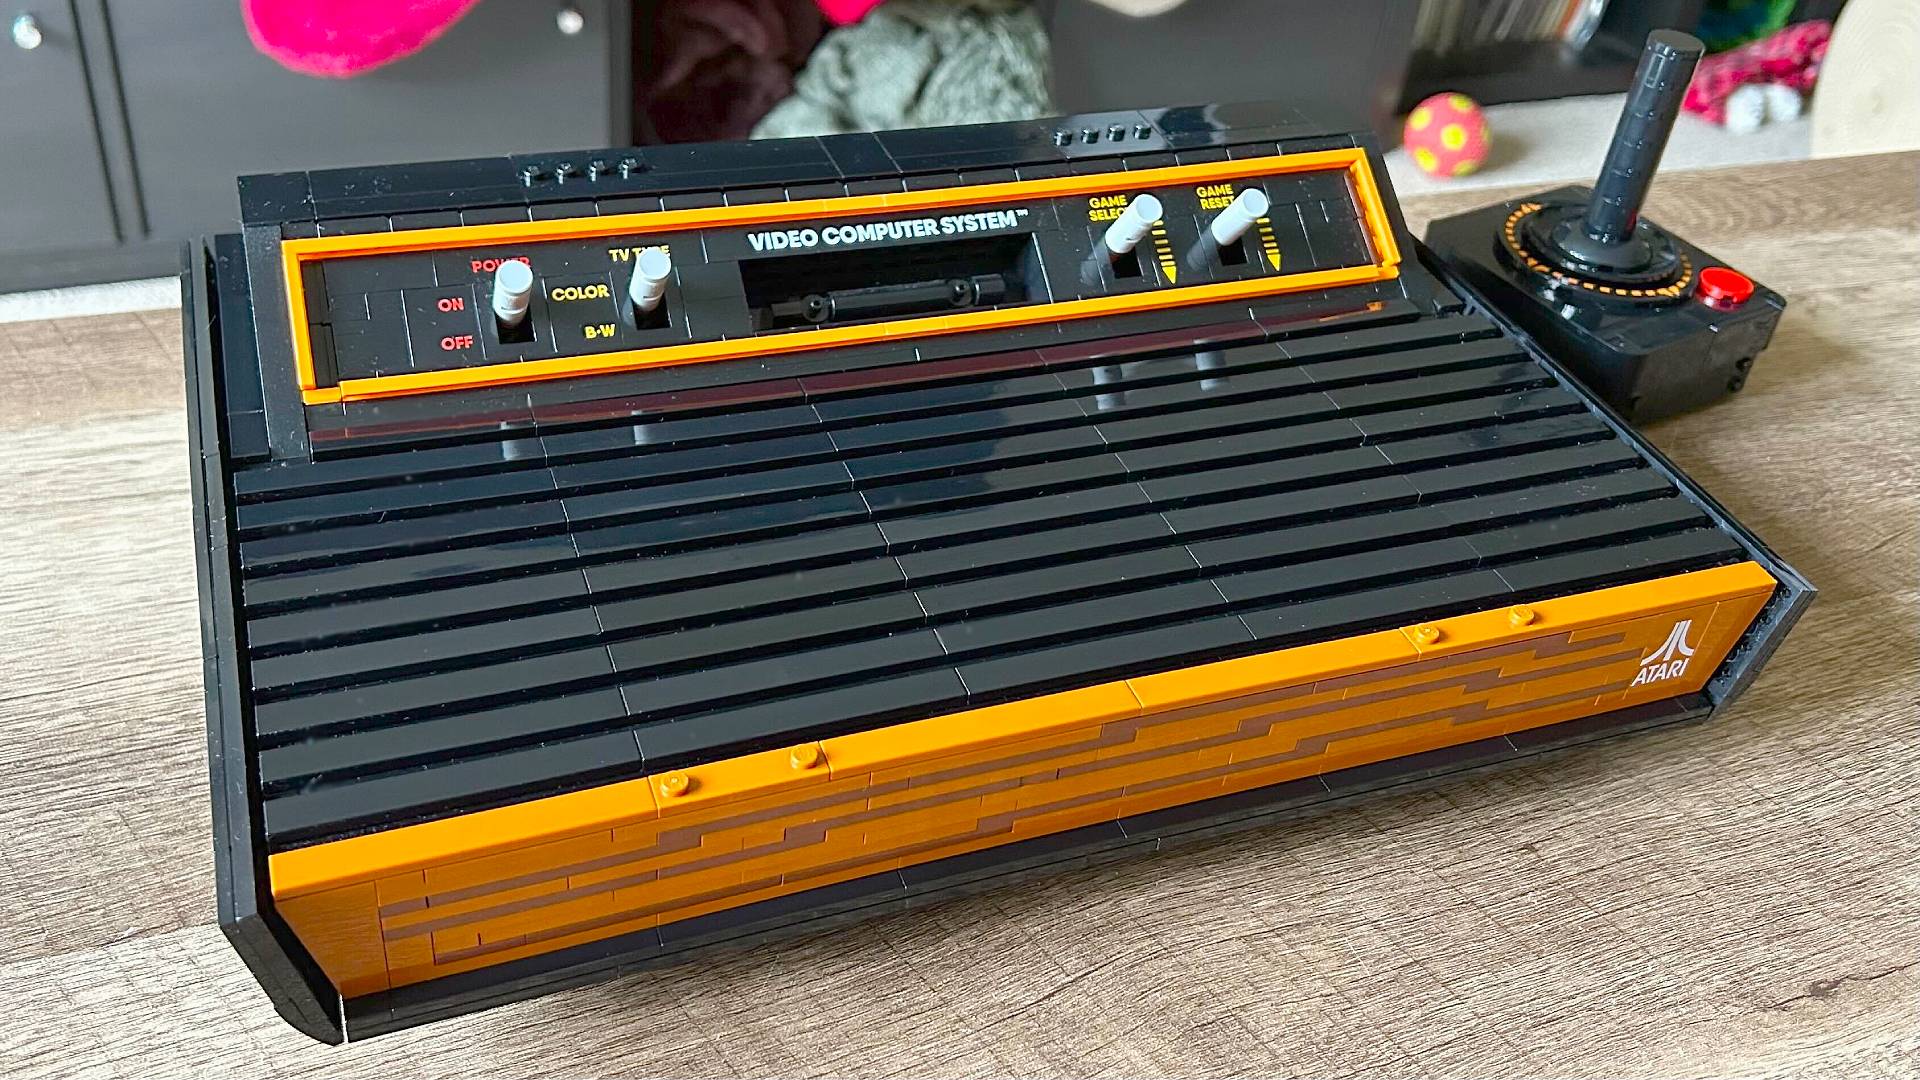 Nintendo should do THIS - Atari 2600+ Review 